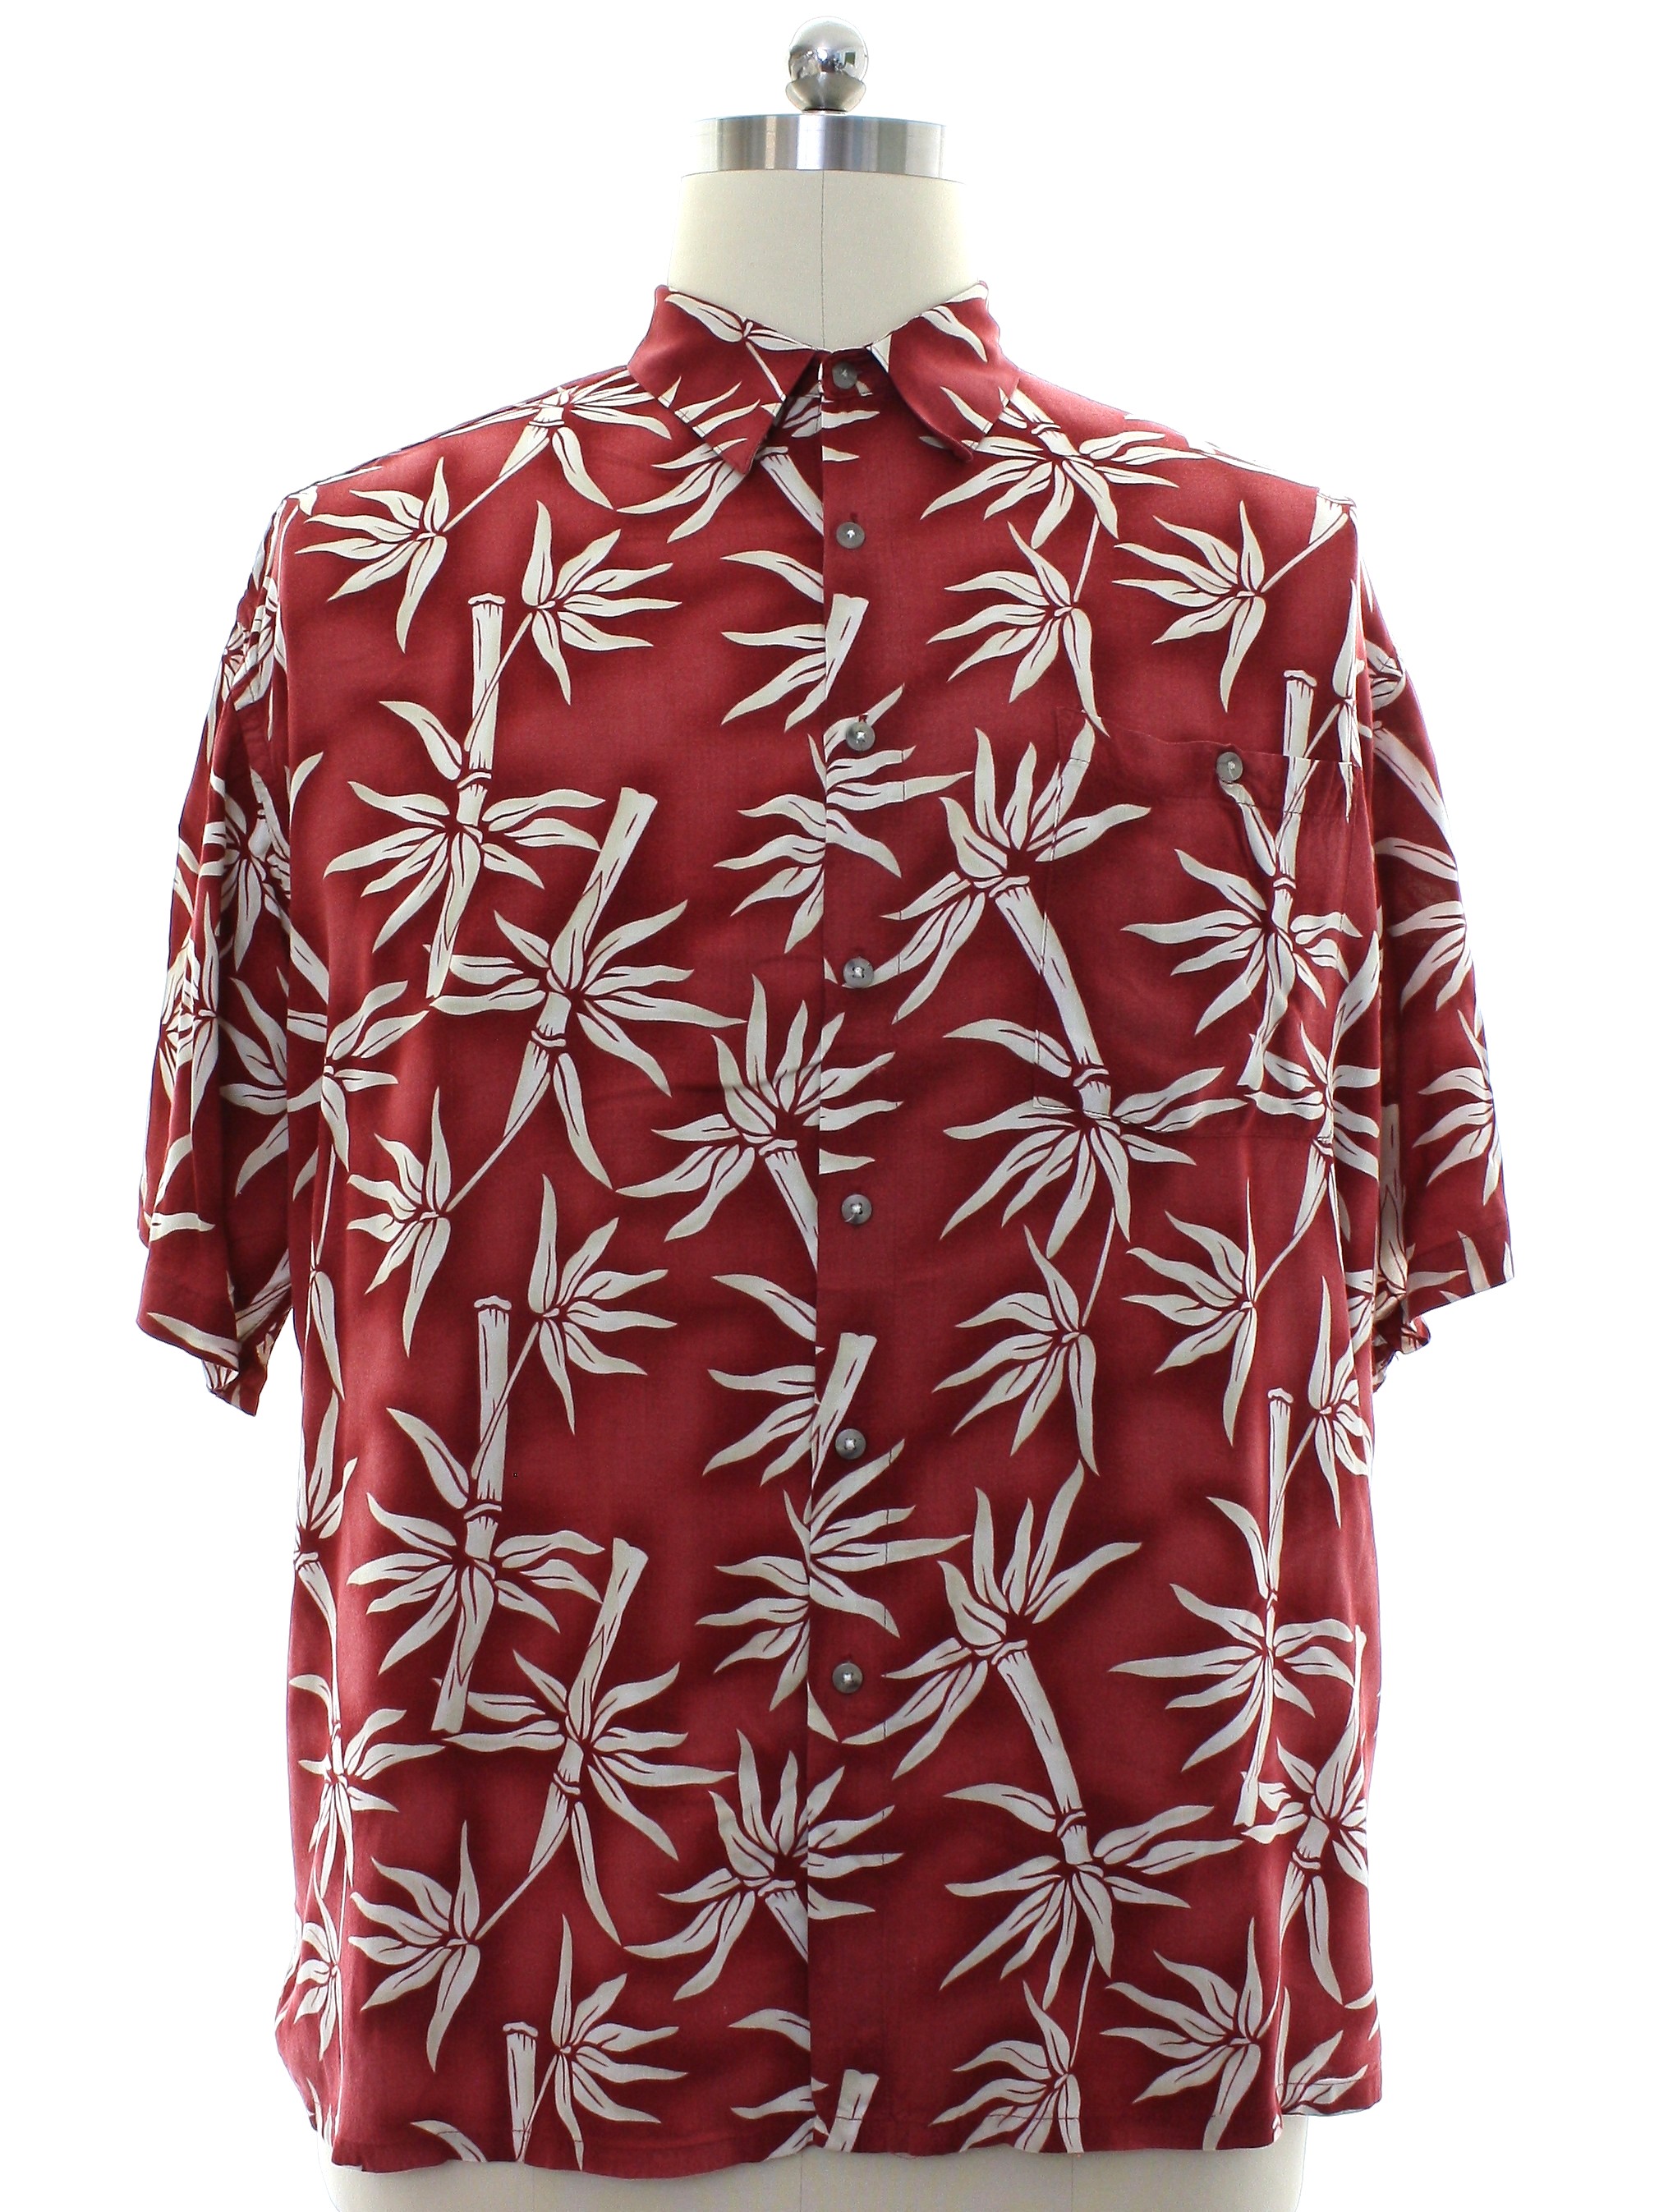 Retro 90s Hawaiian Shirt (Hollis River) : 90s -Hollis River- Mens red ...